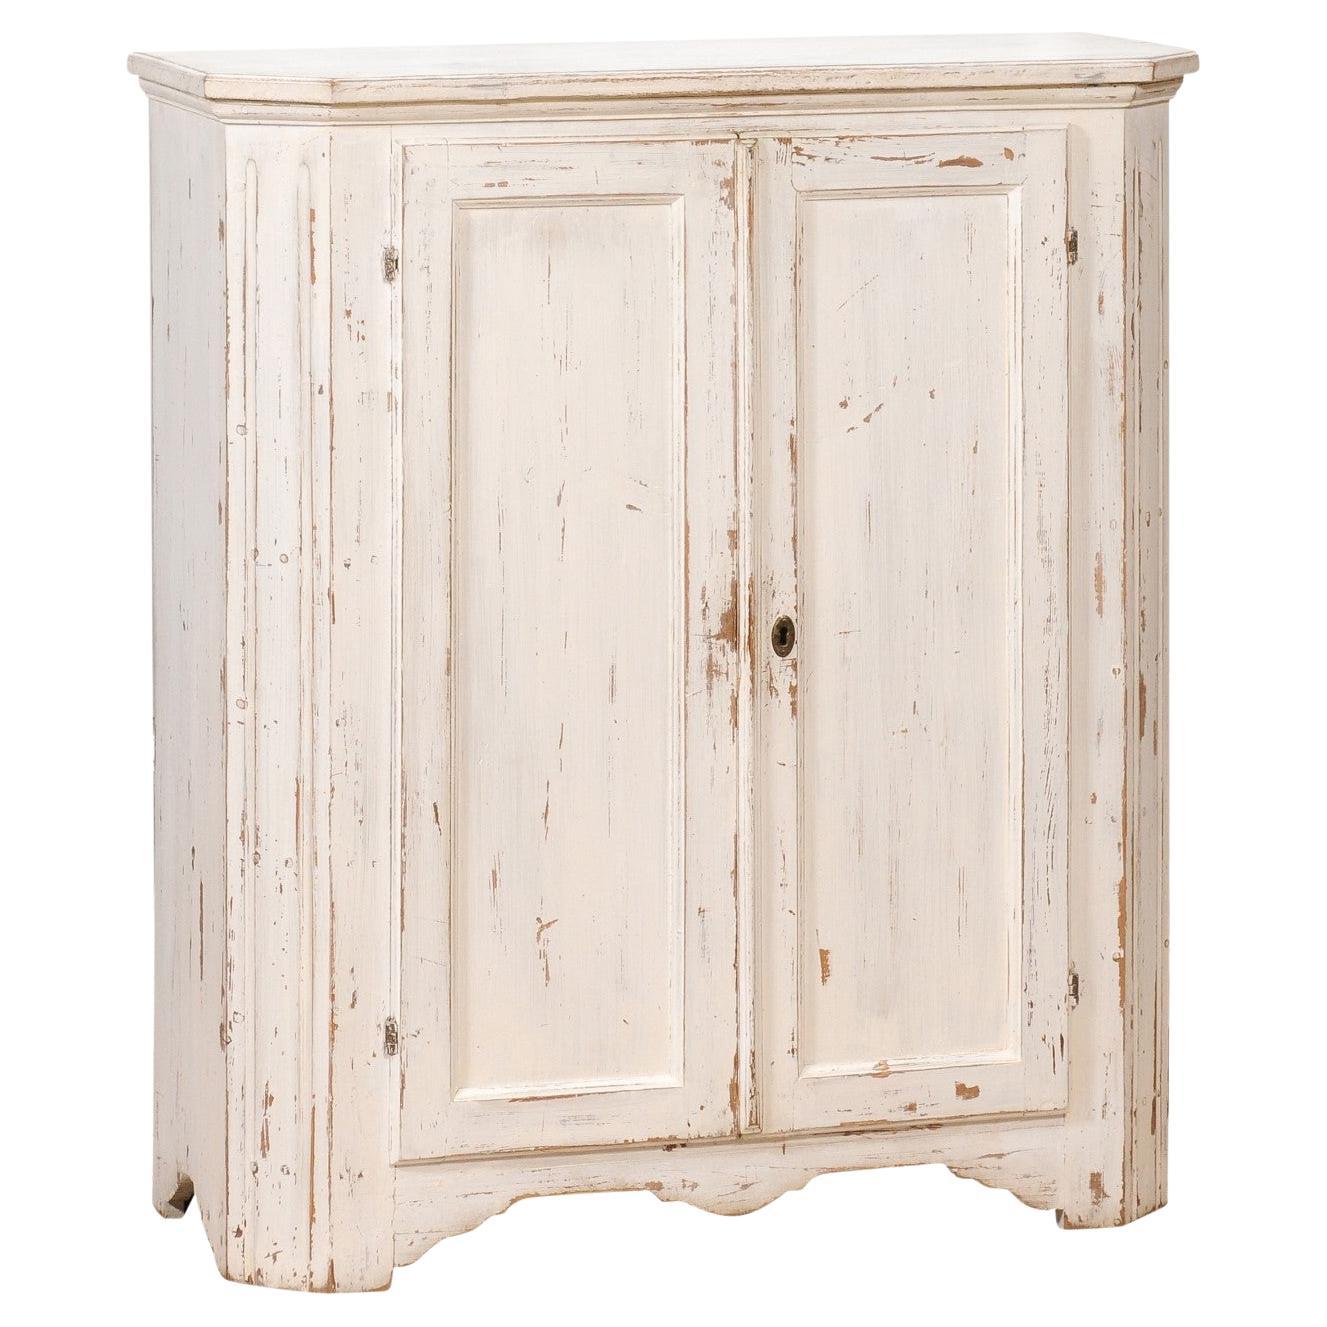 1830s Swedish Off-White Painted Wood Narrow Sideboard mit Distressed Finish im Angebot